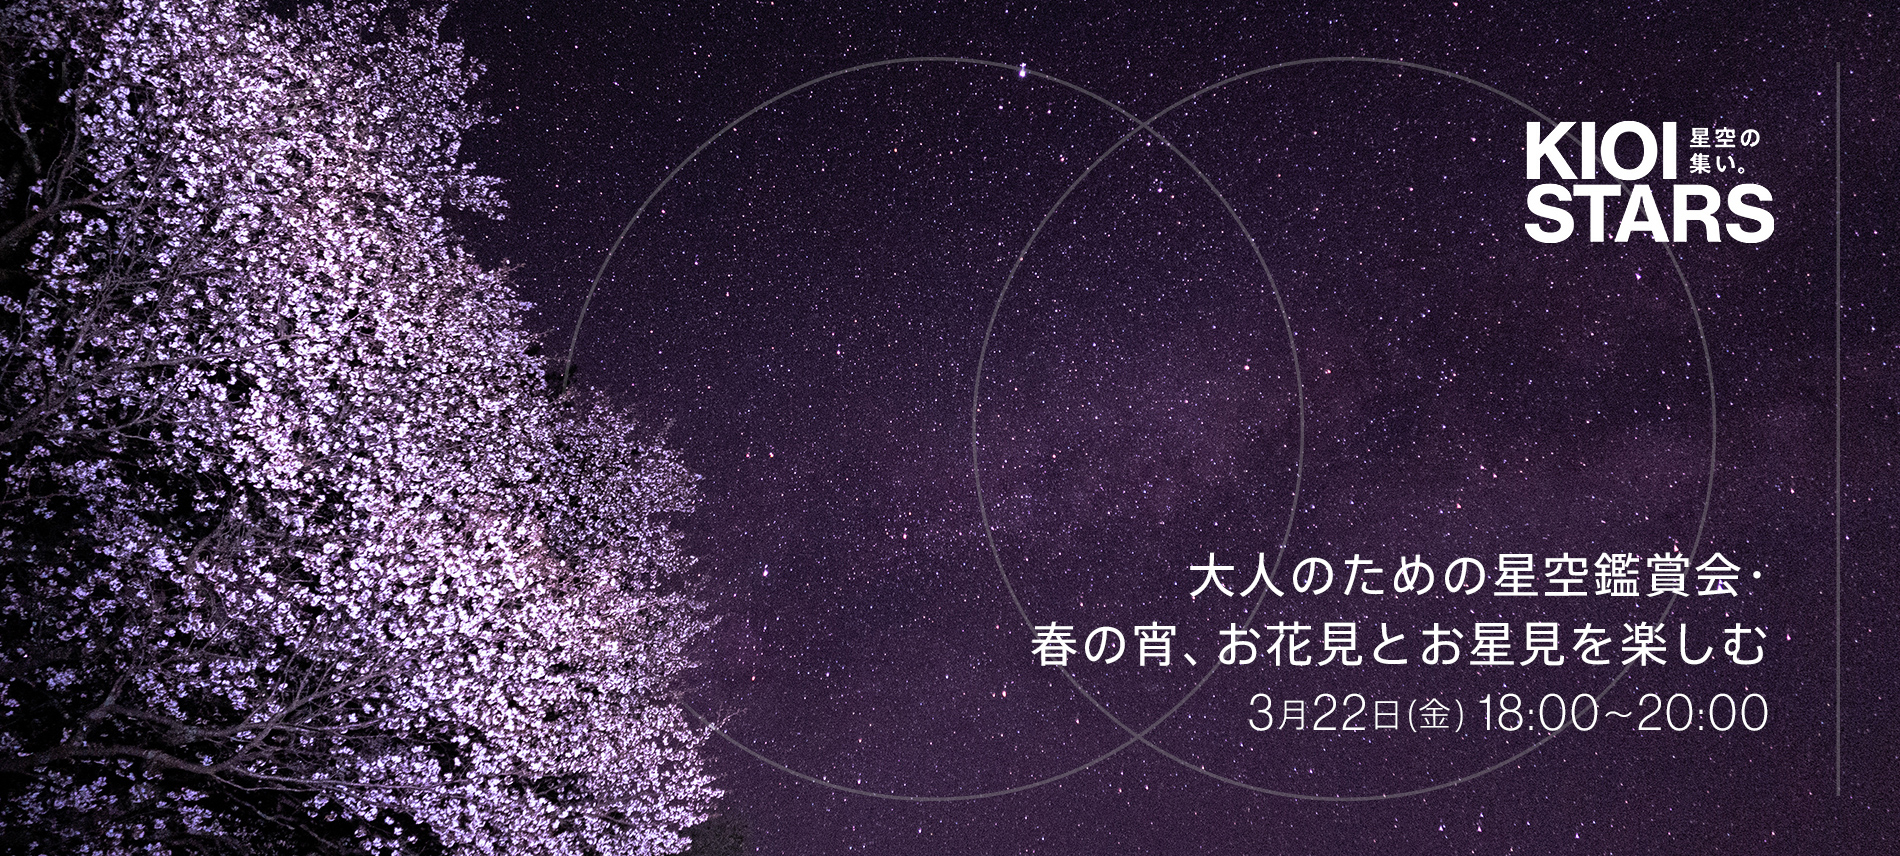 KIOI STARS 星空の集い。「大人のための星空鑑賞会・春の宵、お花見とお星見を楽しむ」